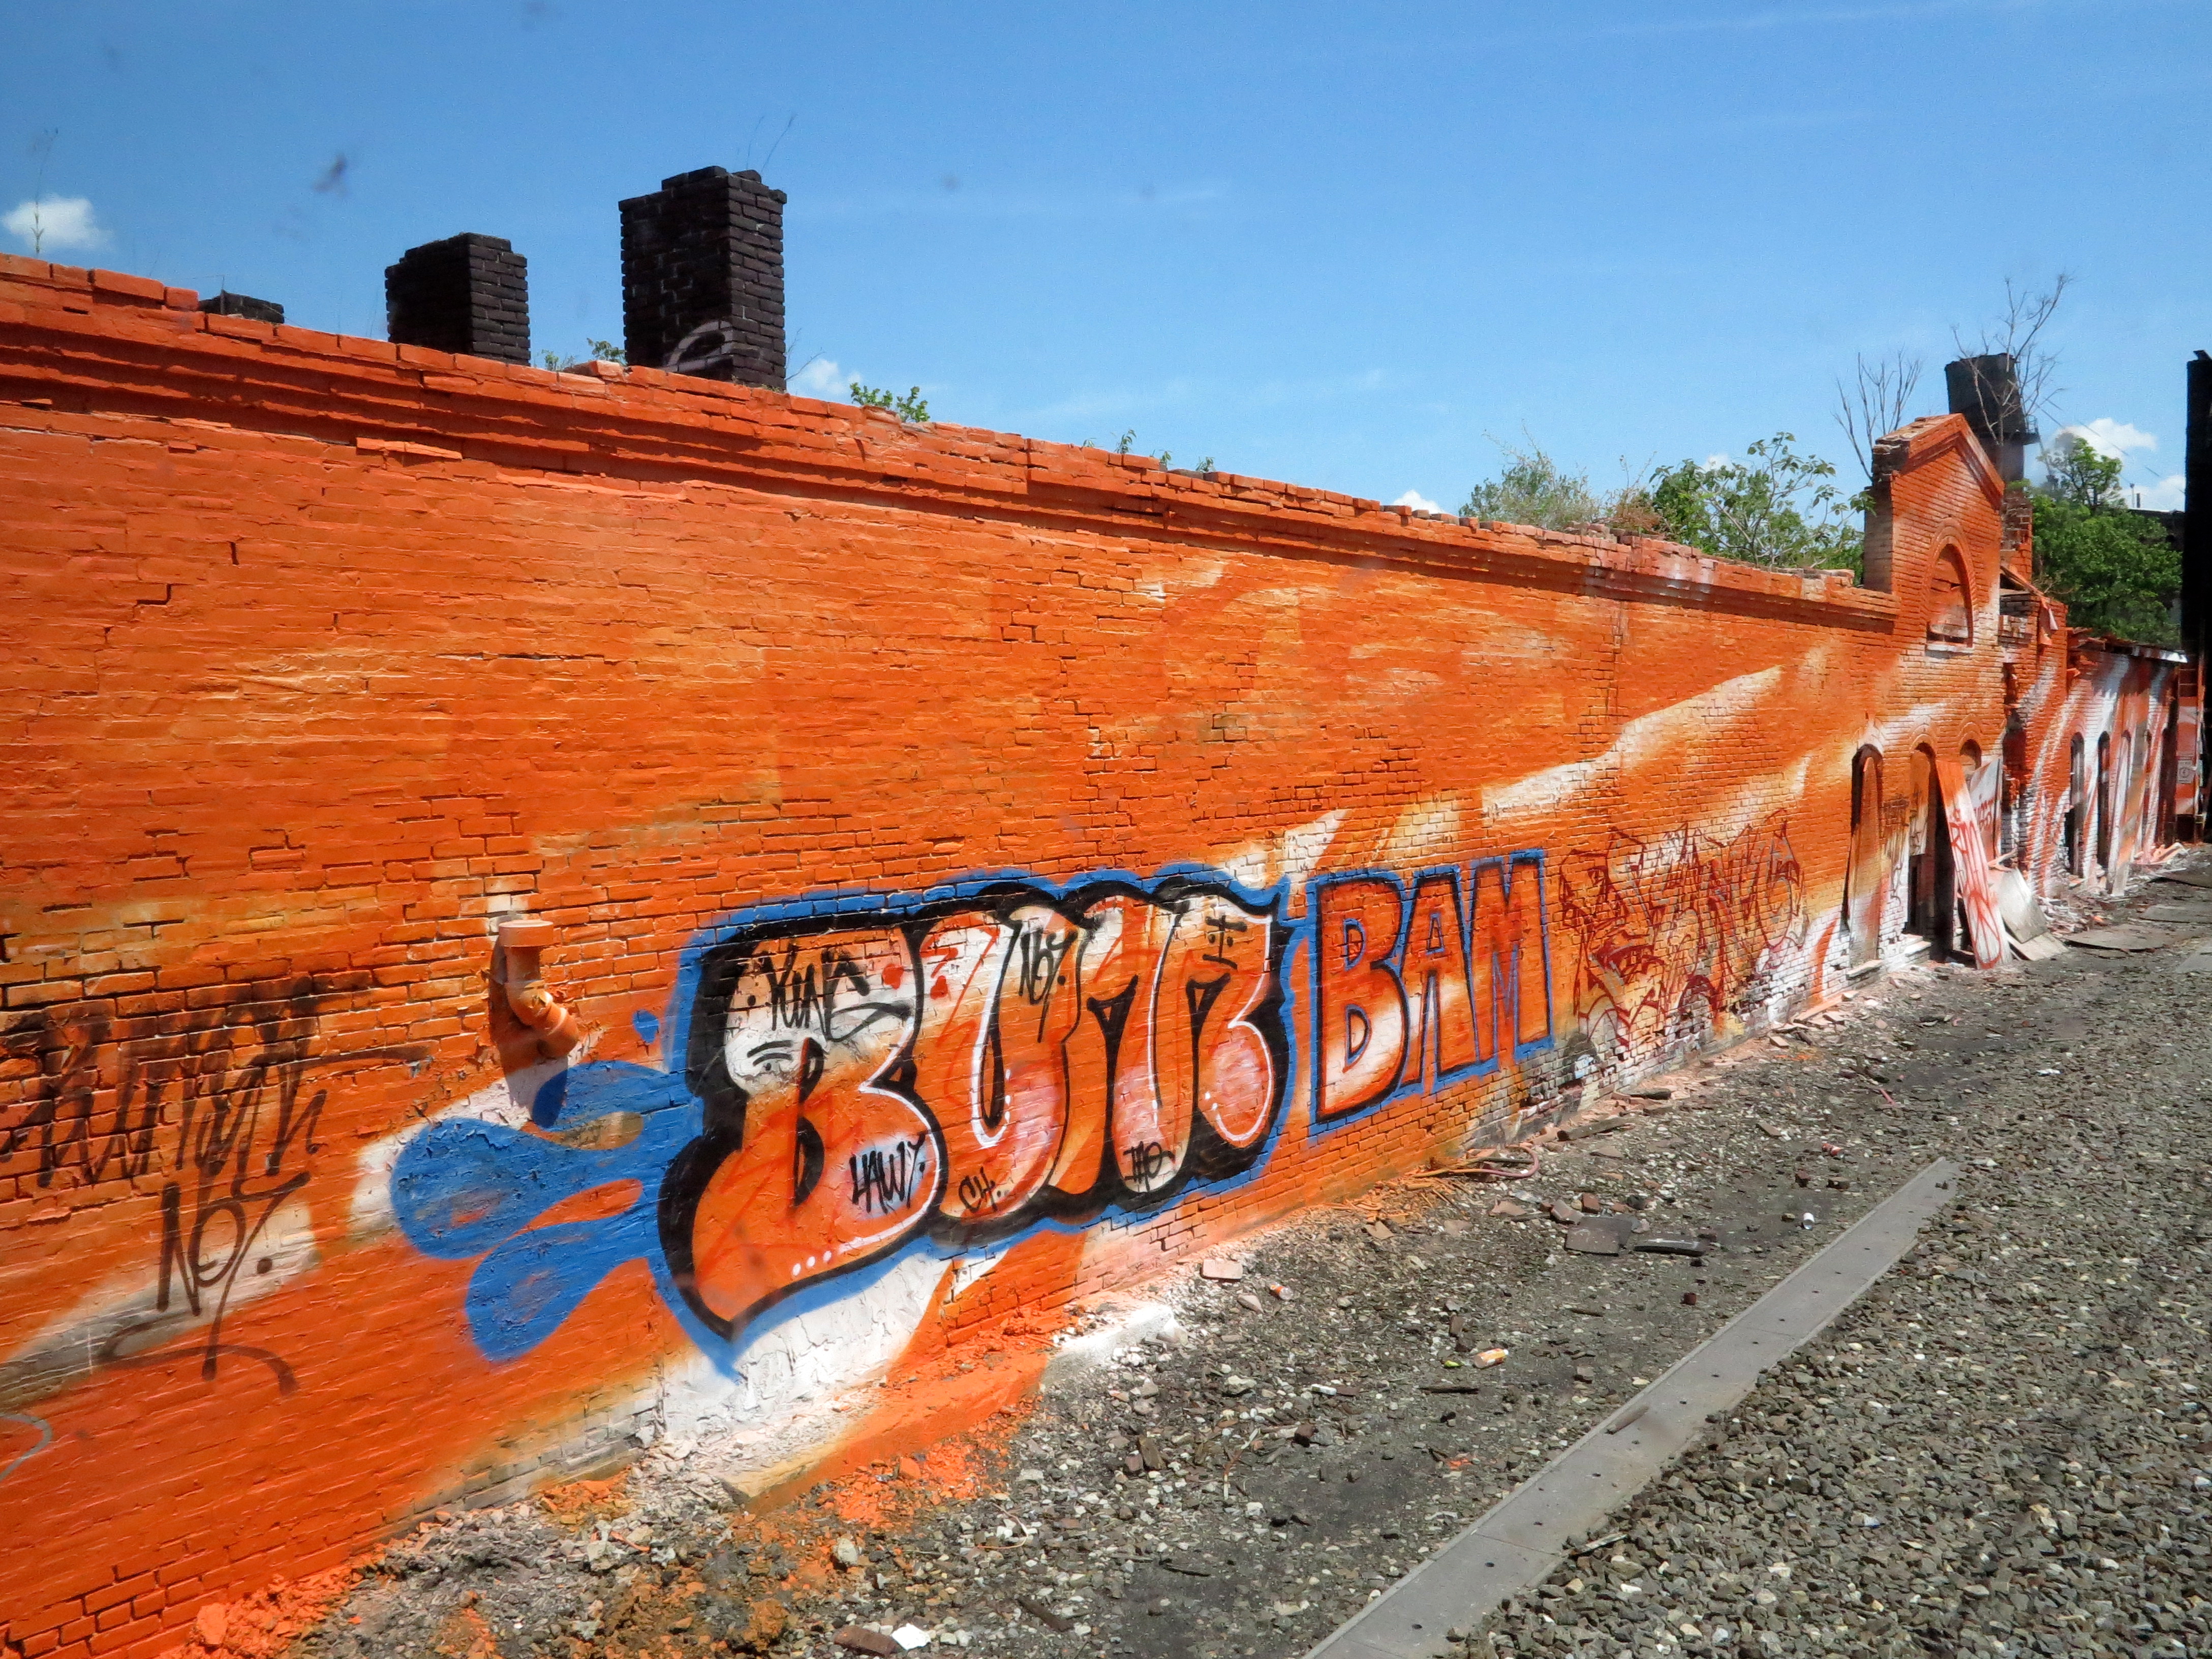 Graffiti begins to reclaim the walls